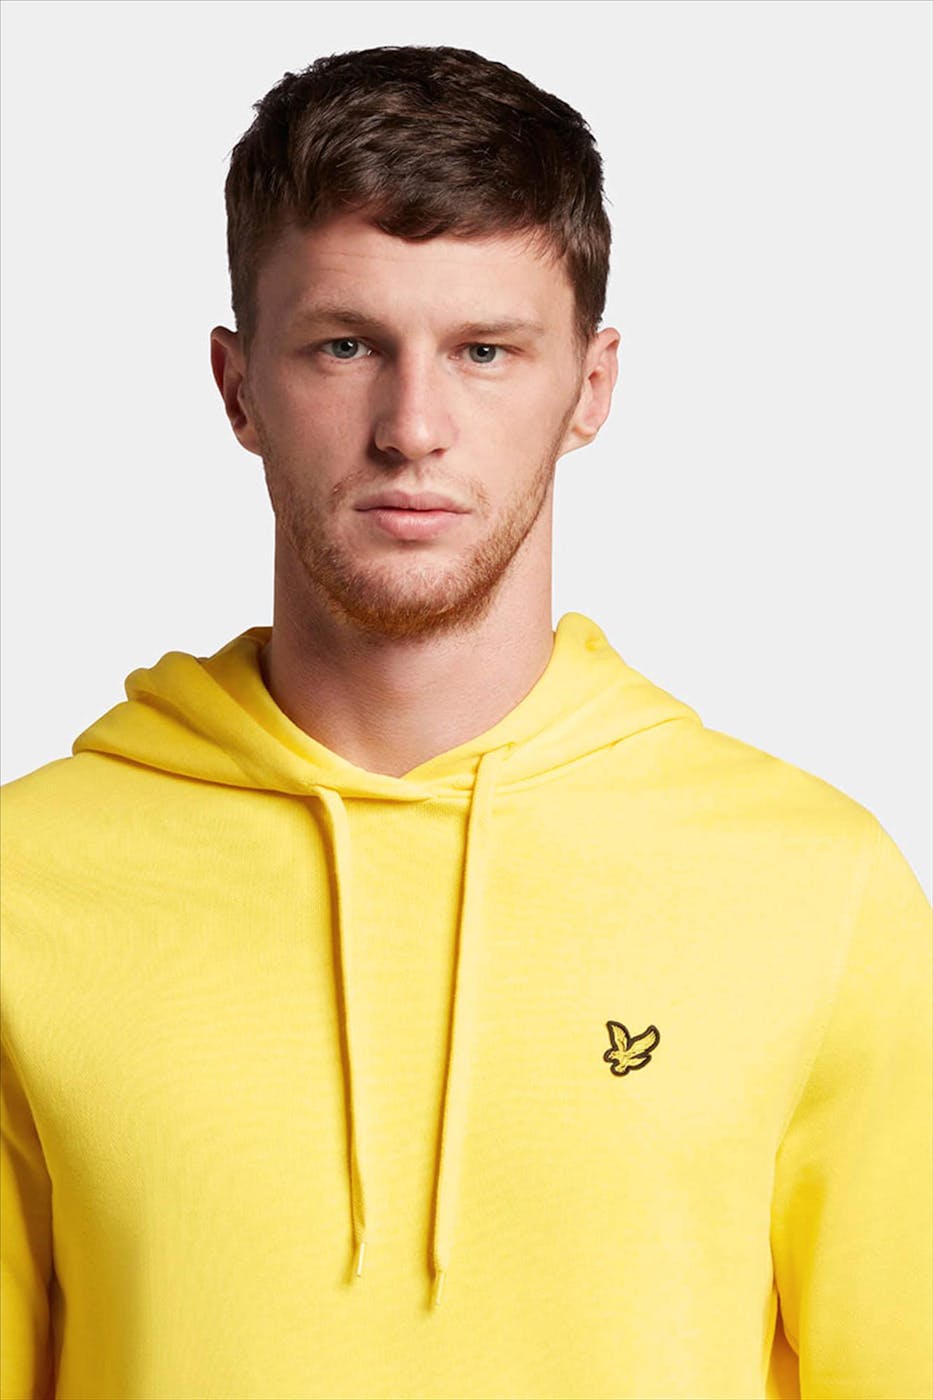 Lyle & Scott - Gele Pigment Dye hoodie